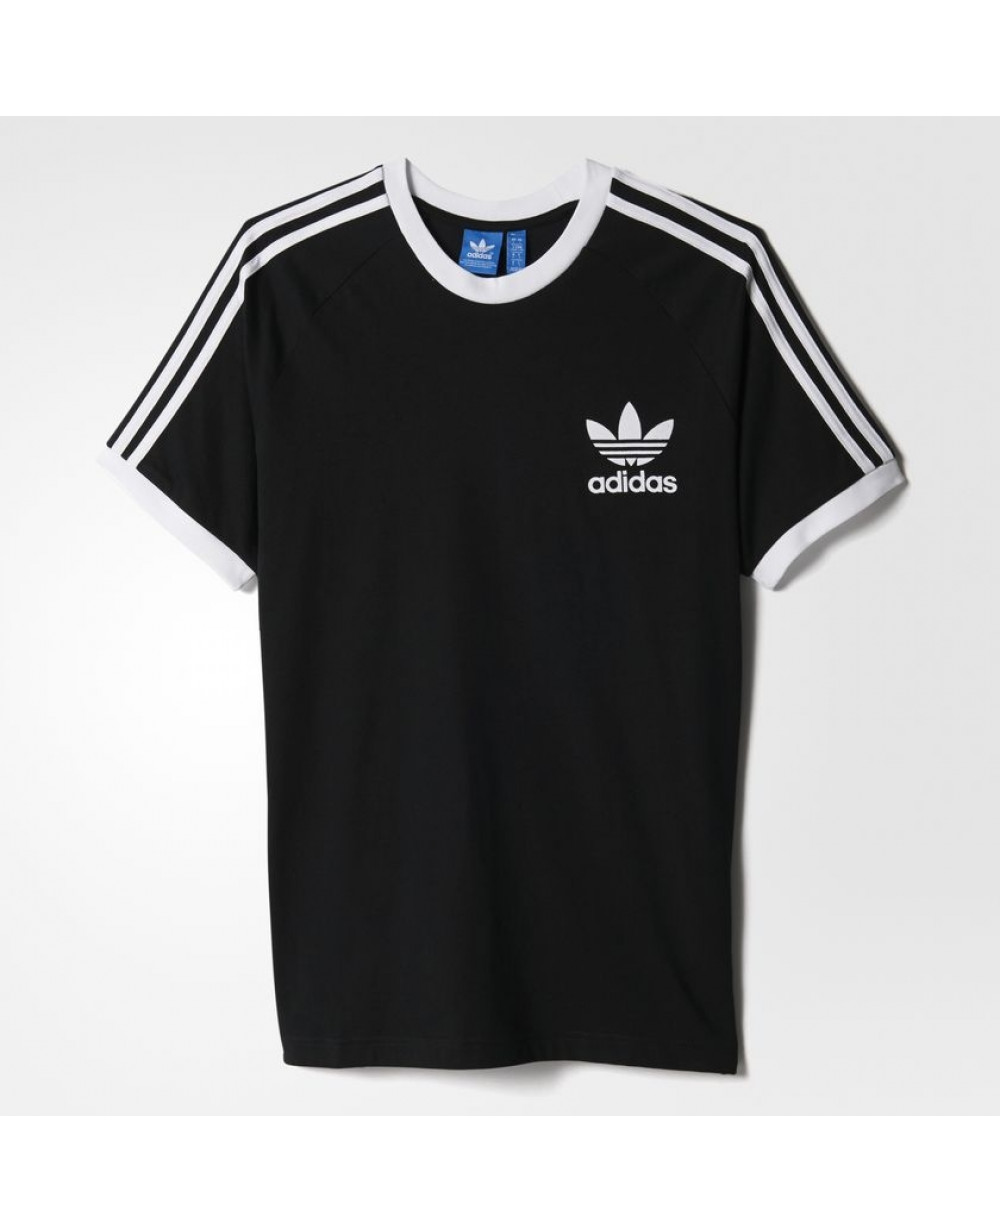 Adidas Originals Clfn T-Shirt For Men 